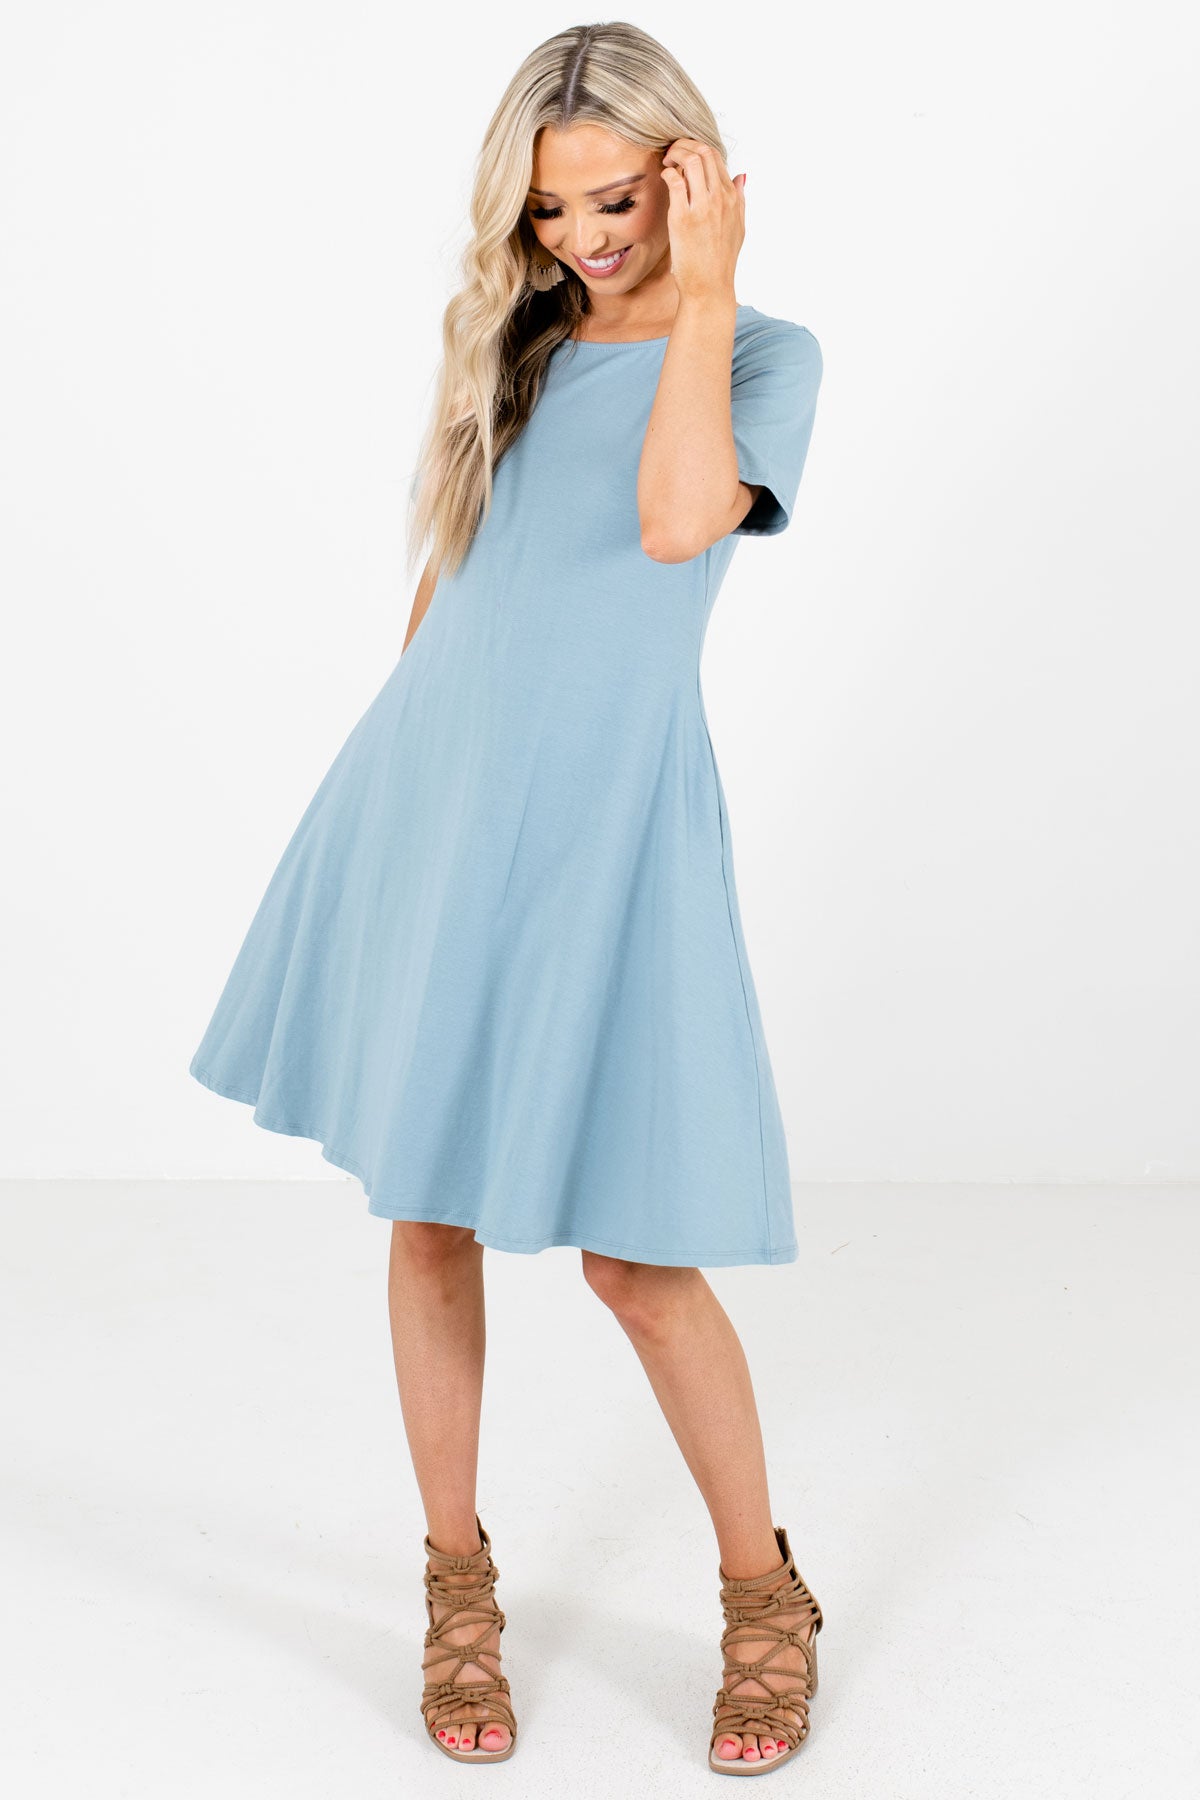 Blue Casual Everyday Boutique Knee-Length Dresses for Women